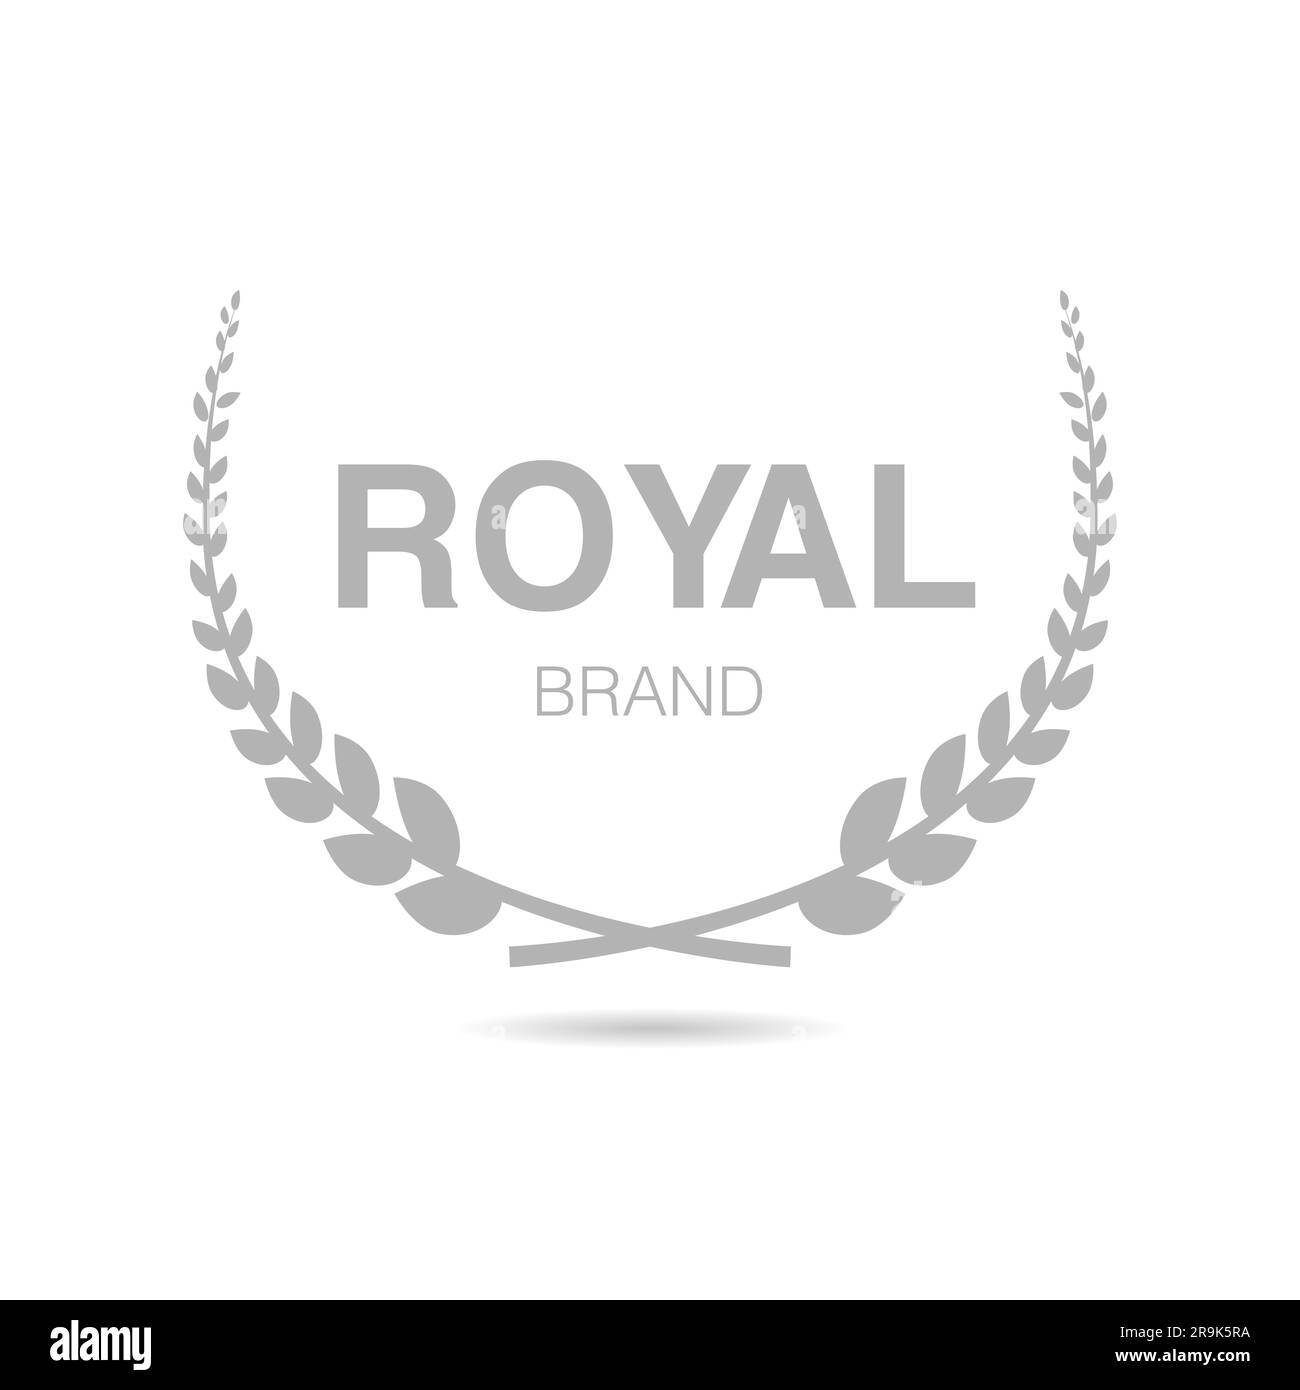 Royal brand laurel wreath vector label Stock Vector